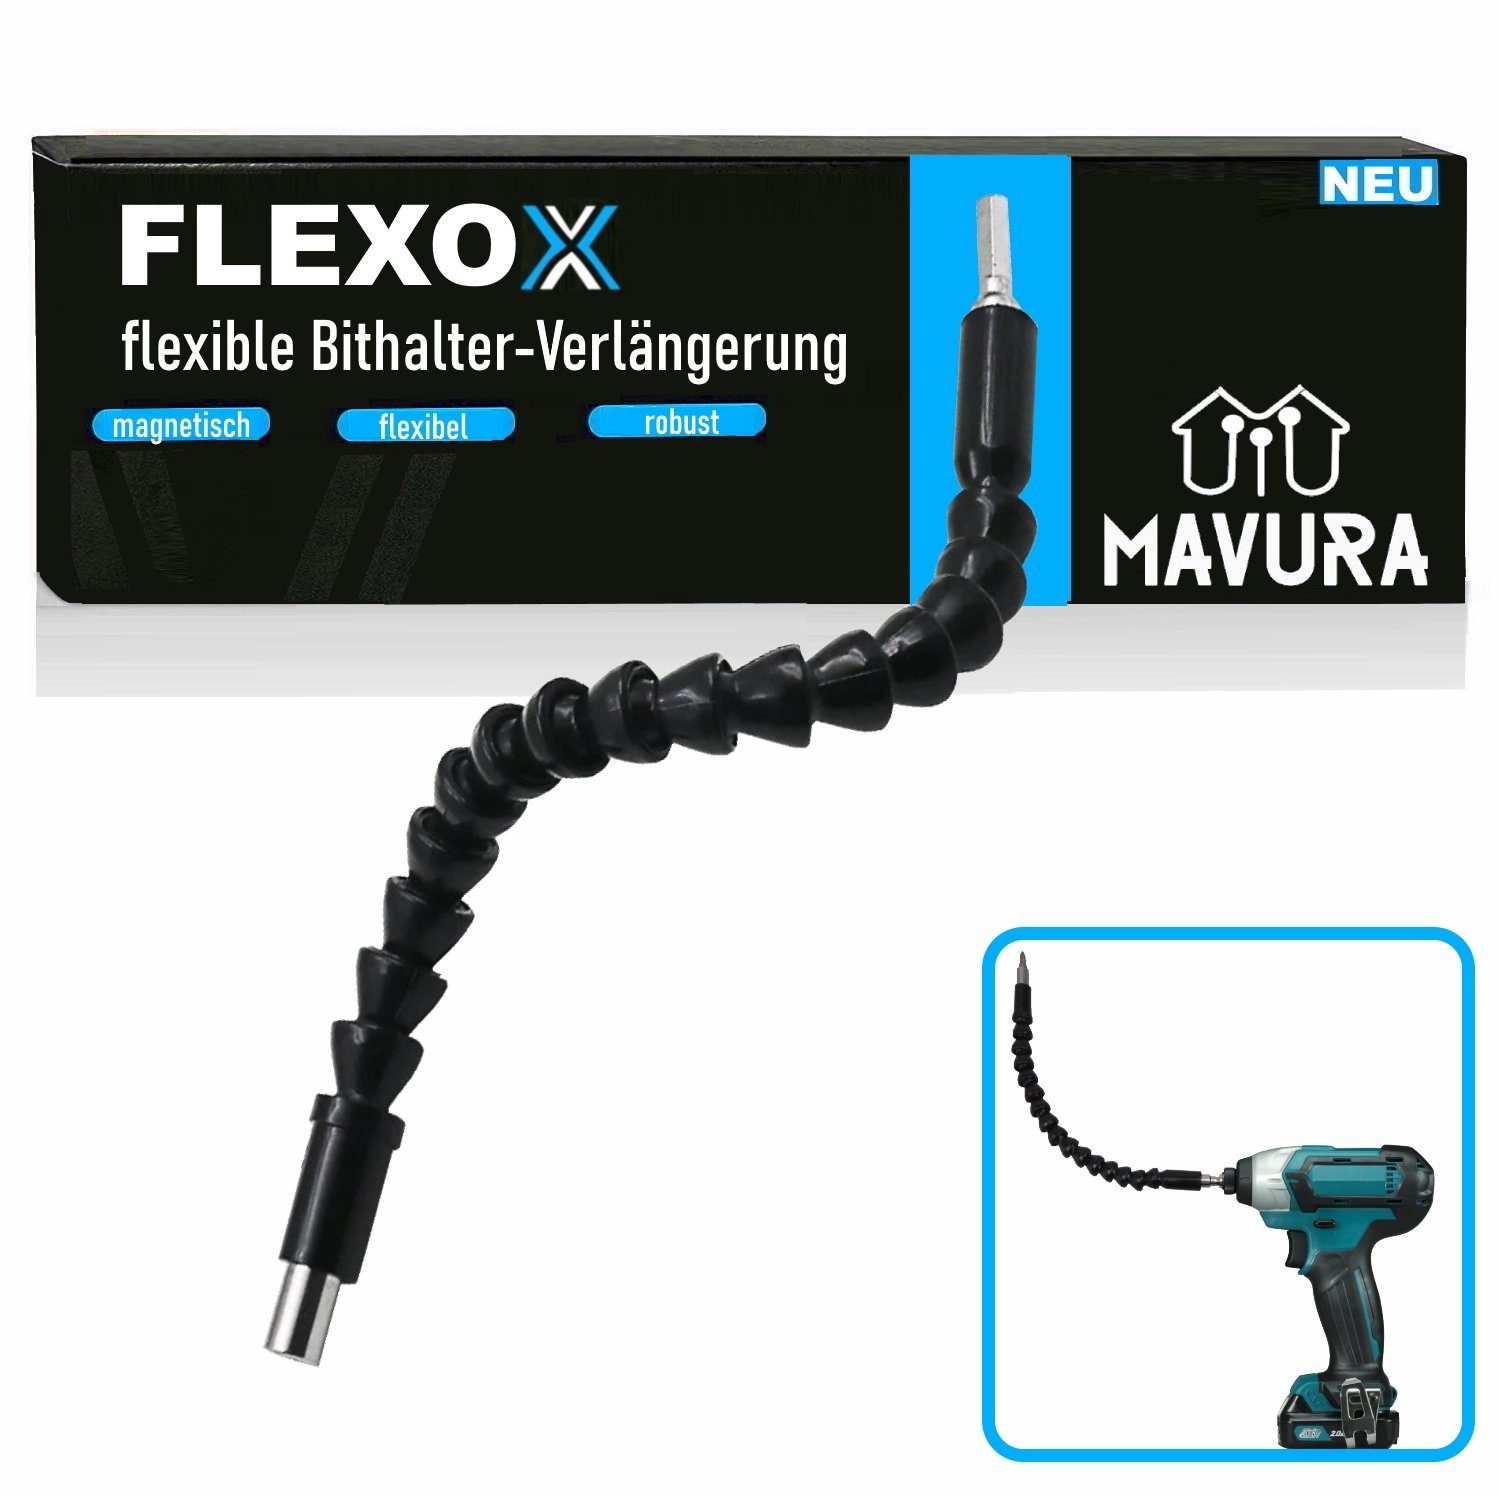 MAVURA FLEXOX Bithalter flexibel Verlängerung schwenkbar magnetisch Bit-Adapter Winkelaufsatz Akkuschrauber zu Winkelaufsatz Akkuschrauber, Winkelaufsatz Bit Winkelaufsatz Akkuschrauber Bohrer | Steckschlüssel